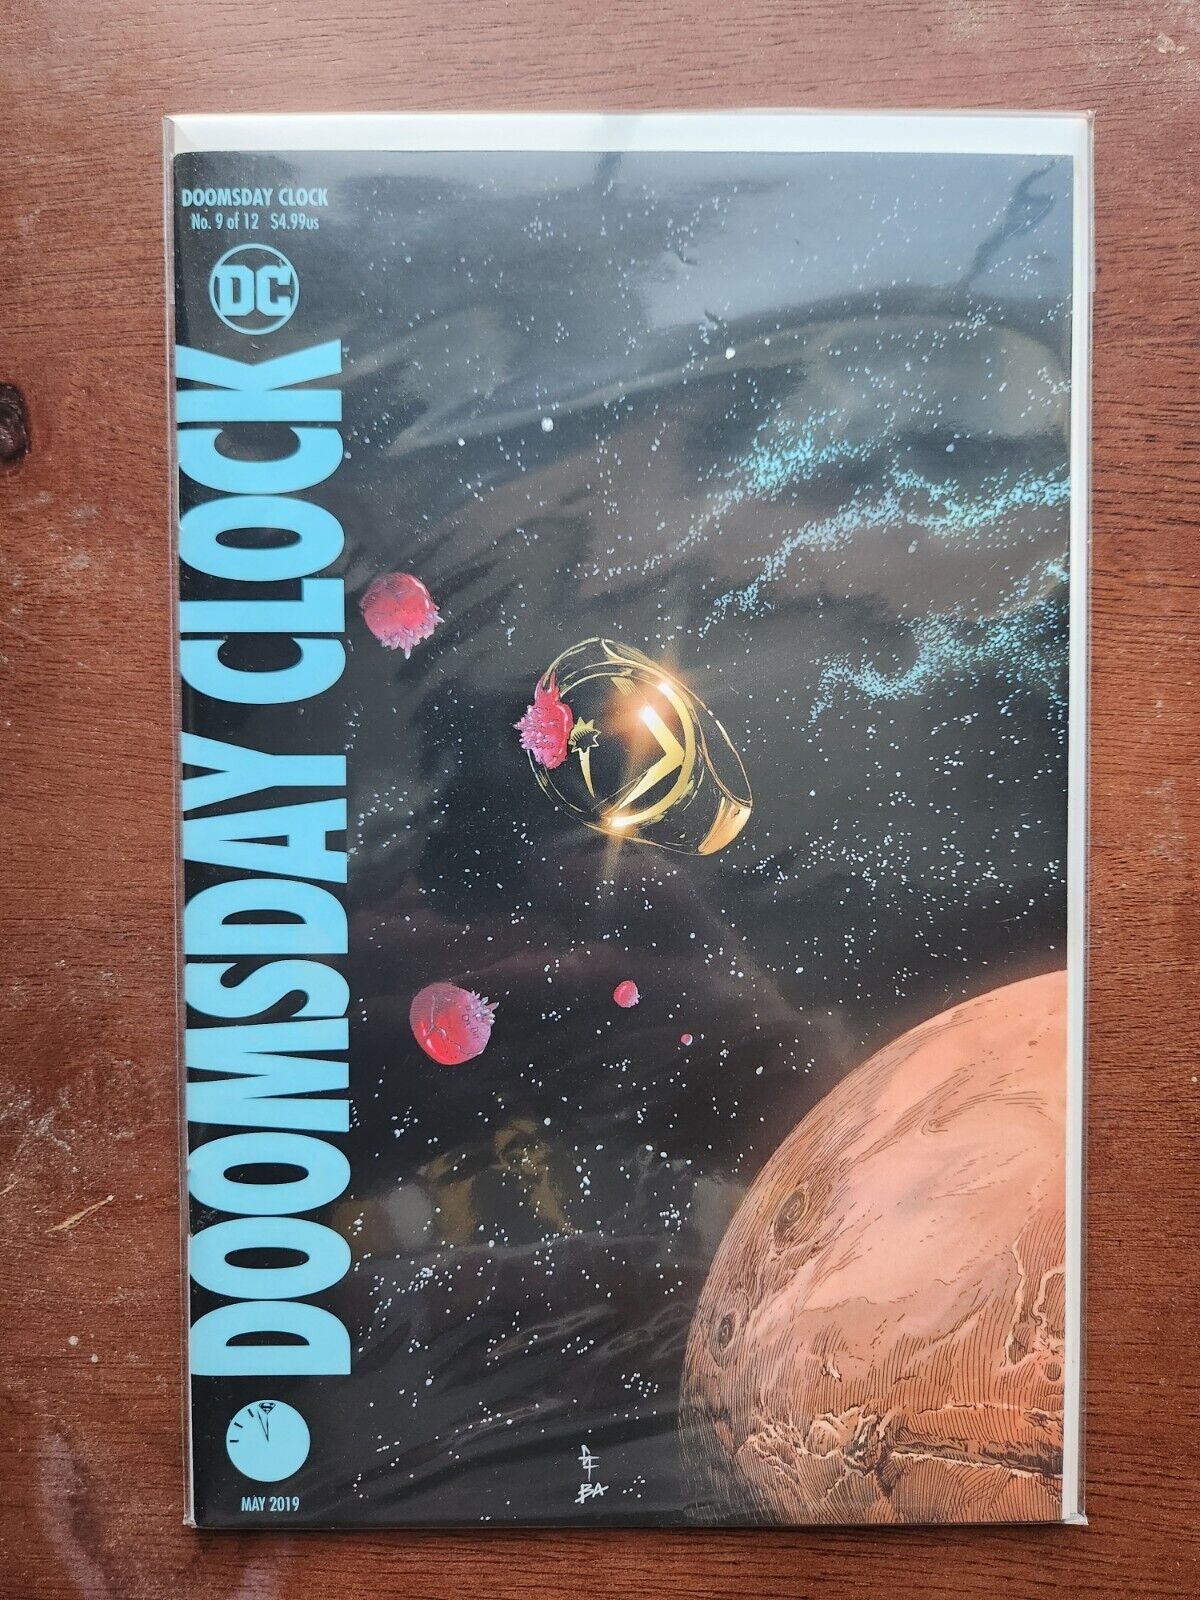 DC COMICS DOOMSDAY CLOCK #9 (2019) COMIC